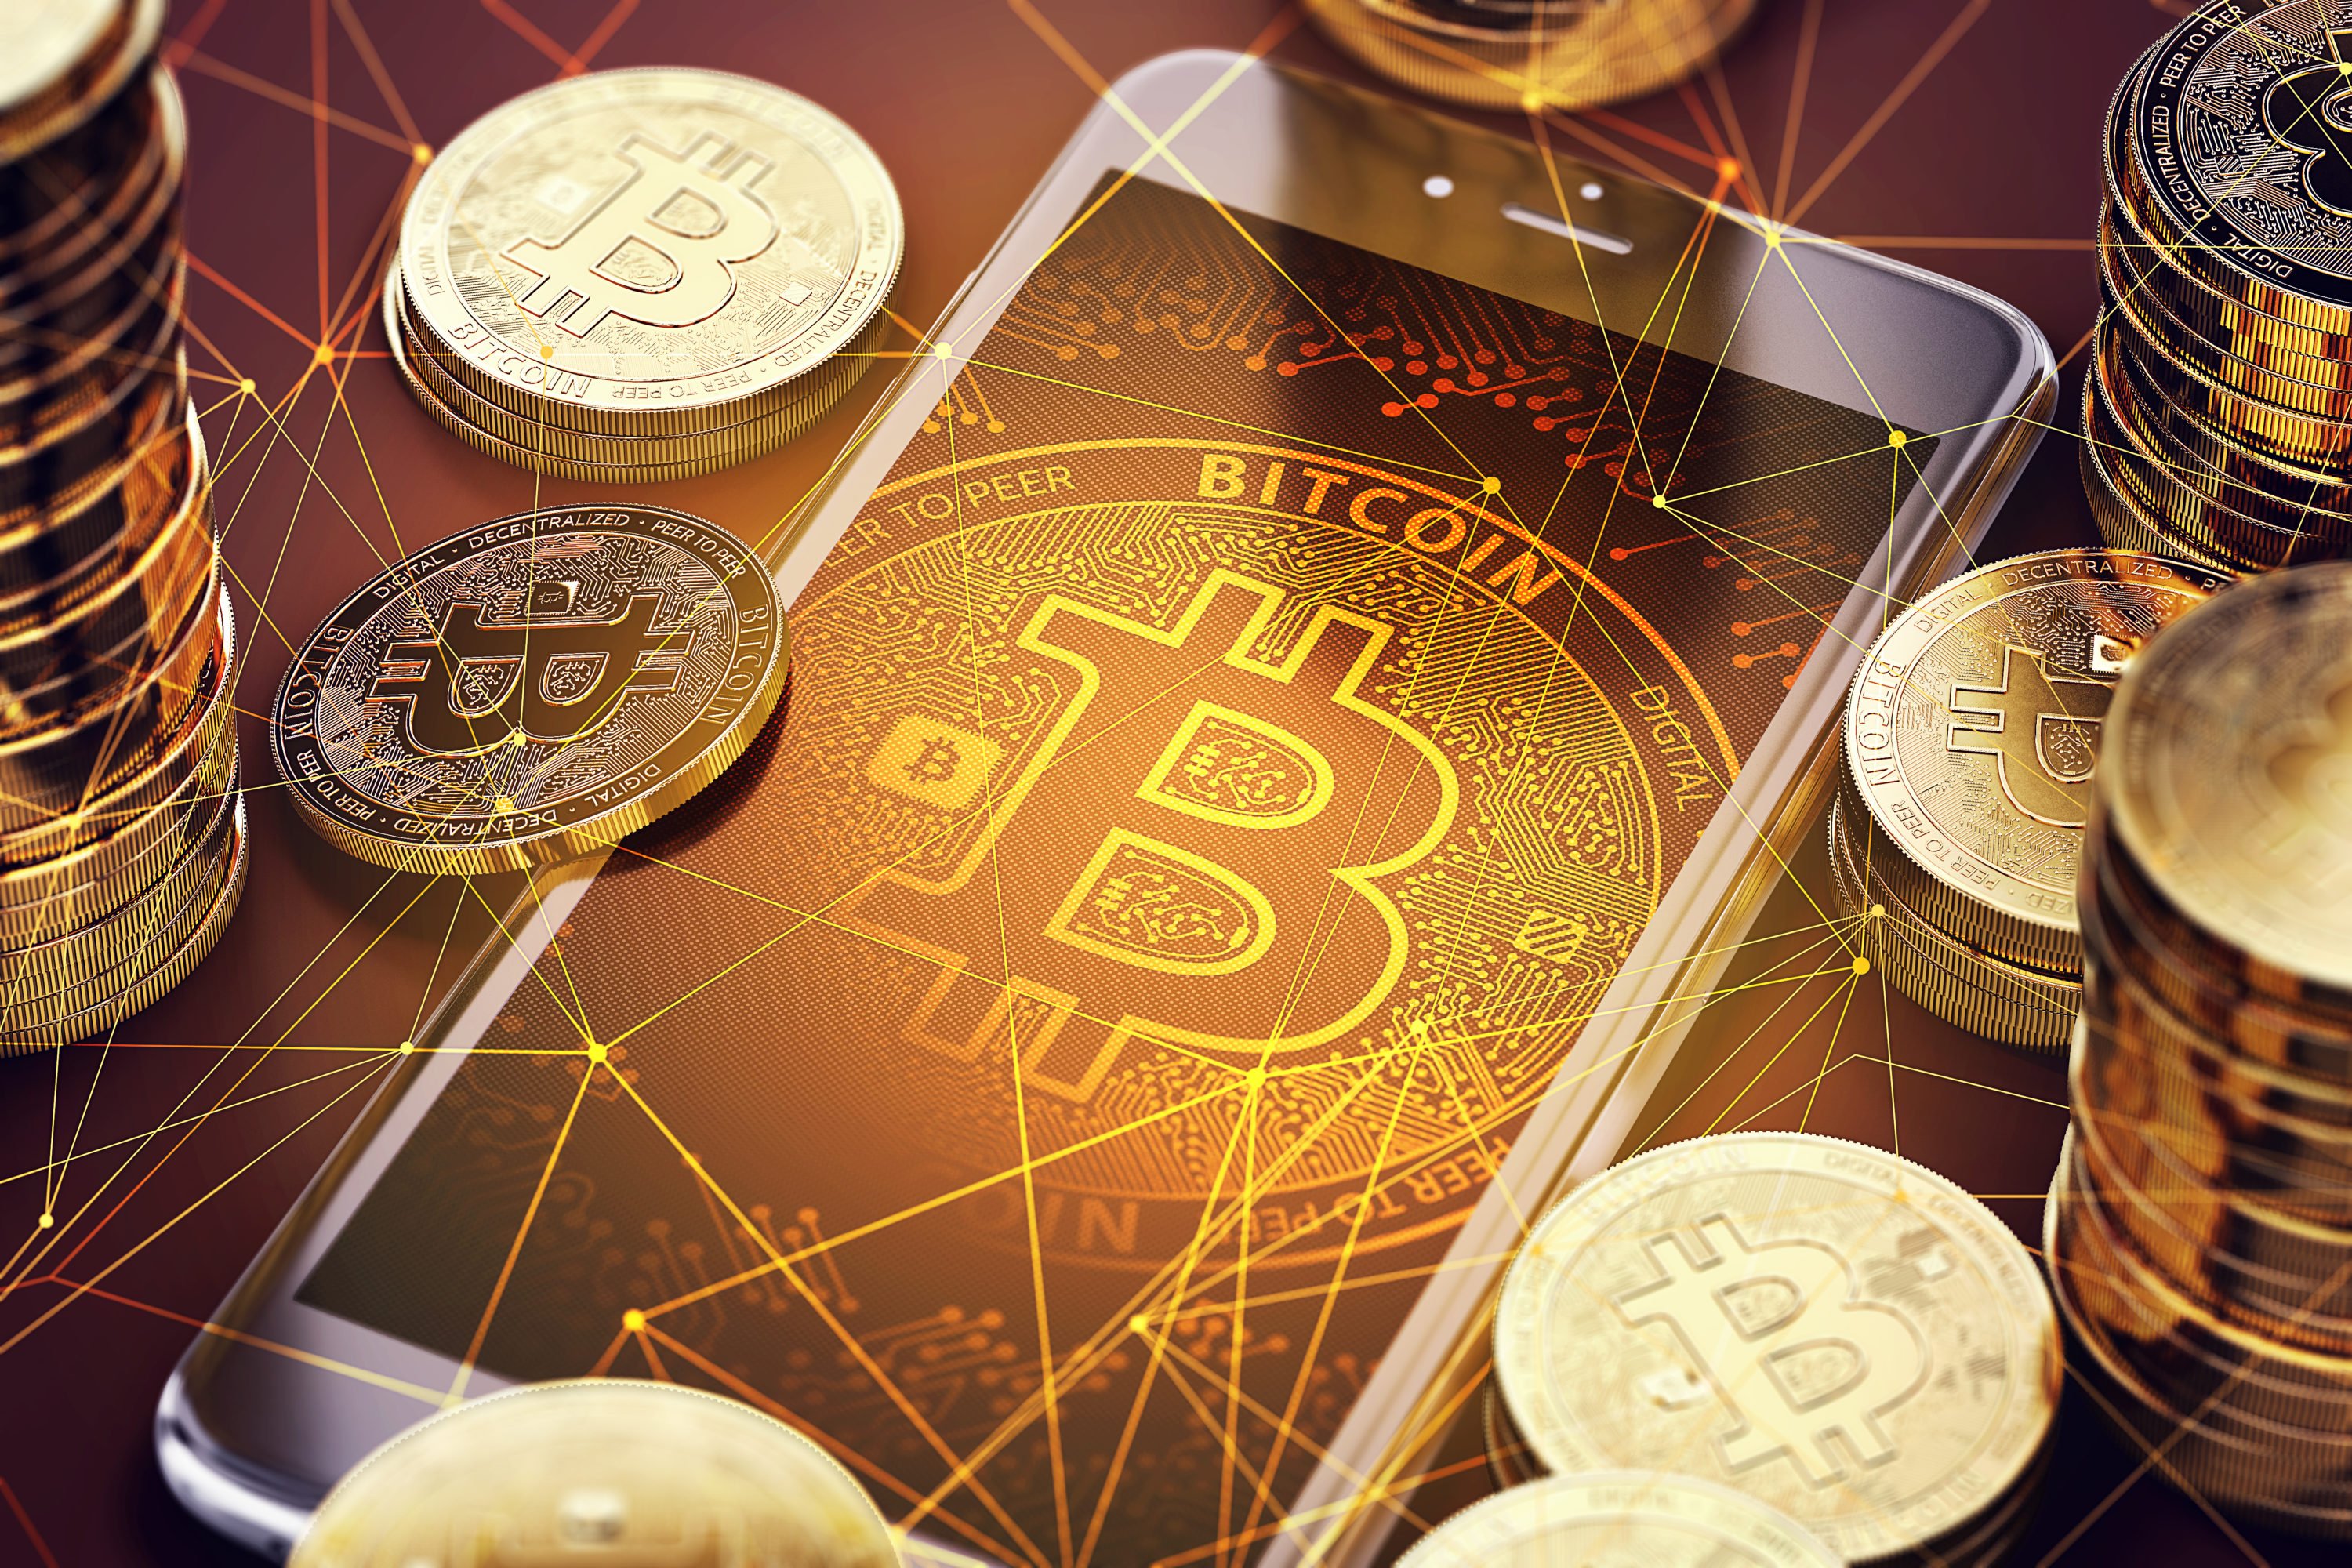  bullish bitcoin tidbits crypto booms high another 